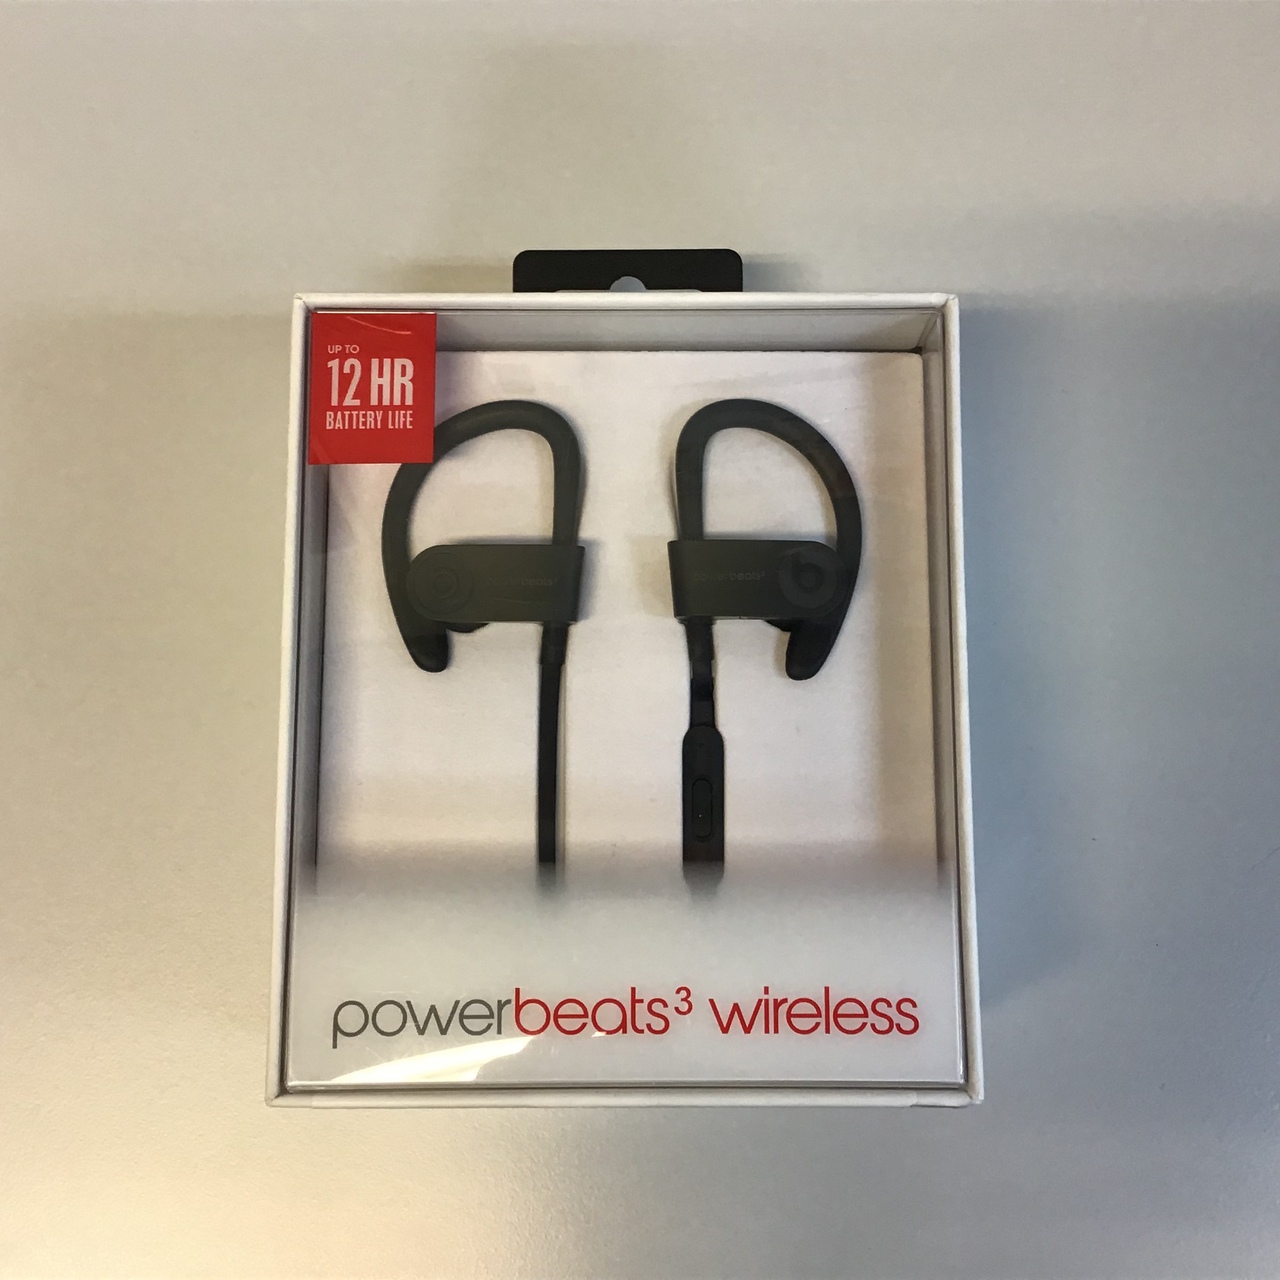 powerbeats3 wireless